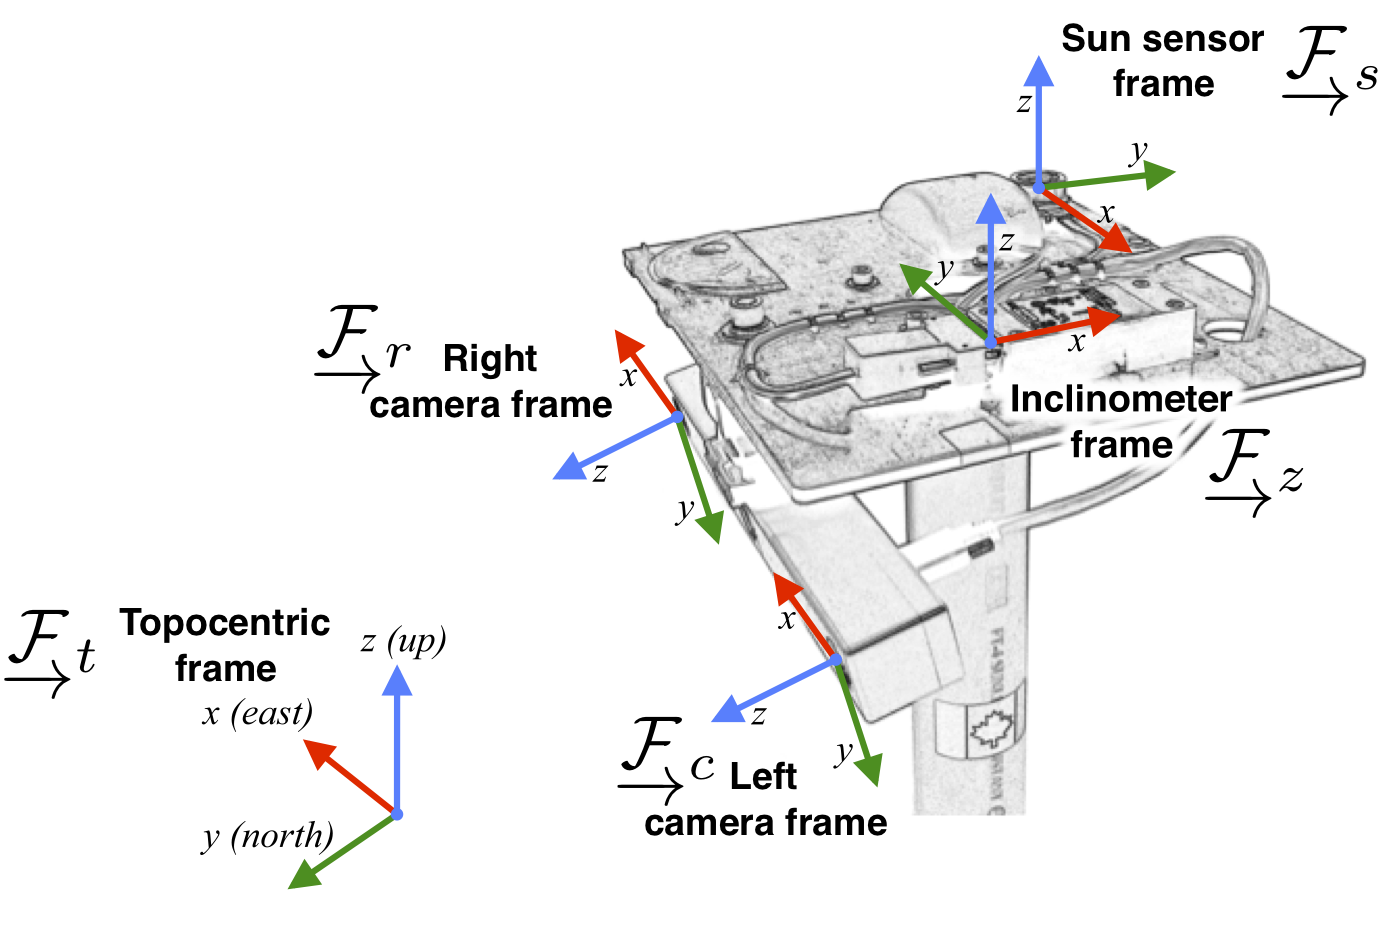 Frames associated with the sensor head